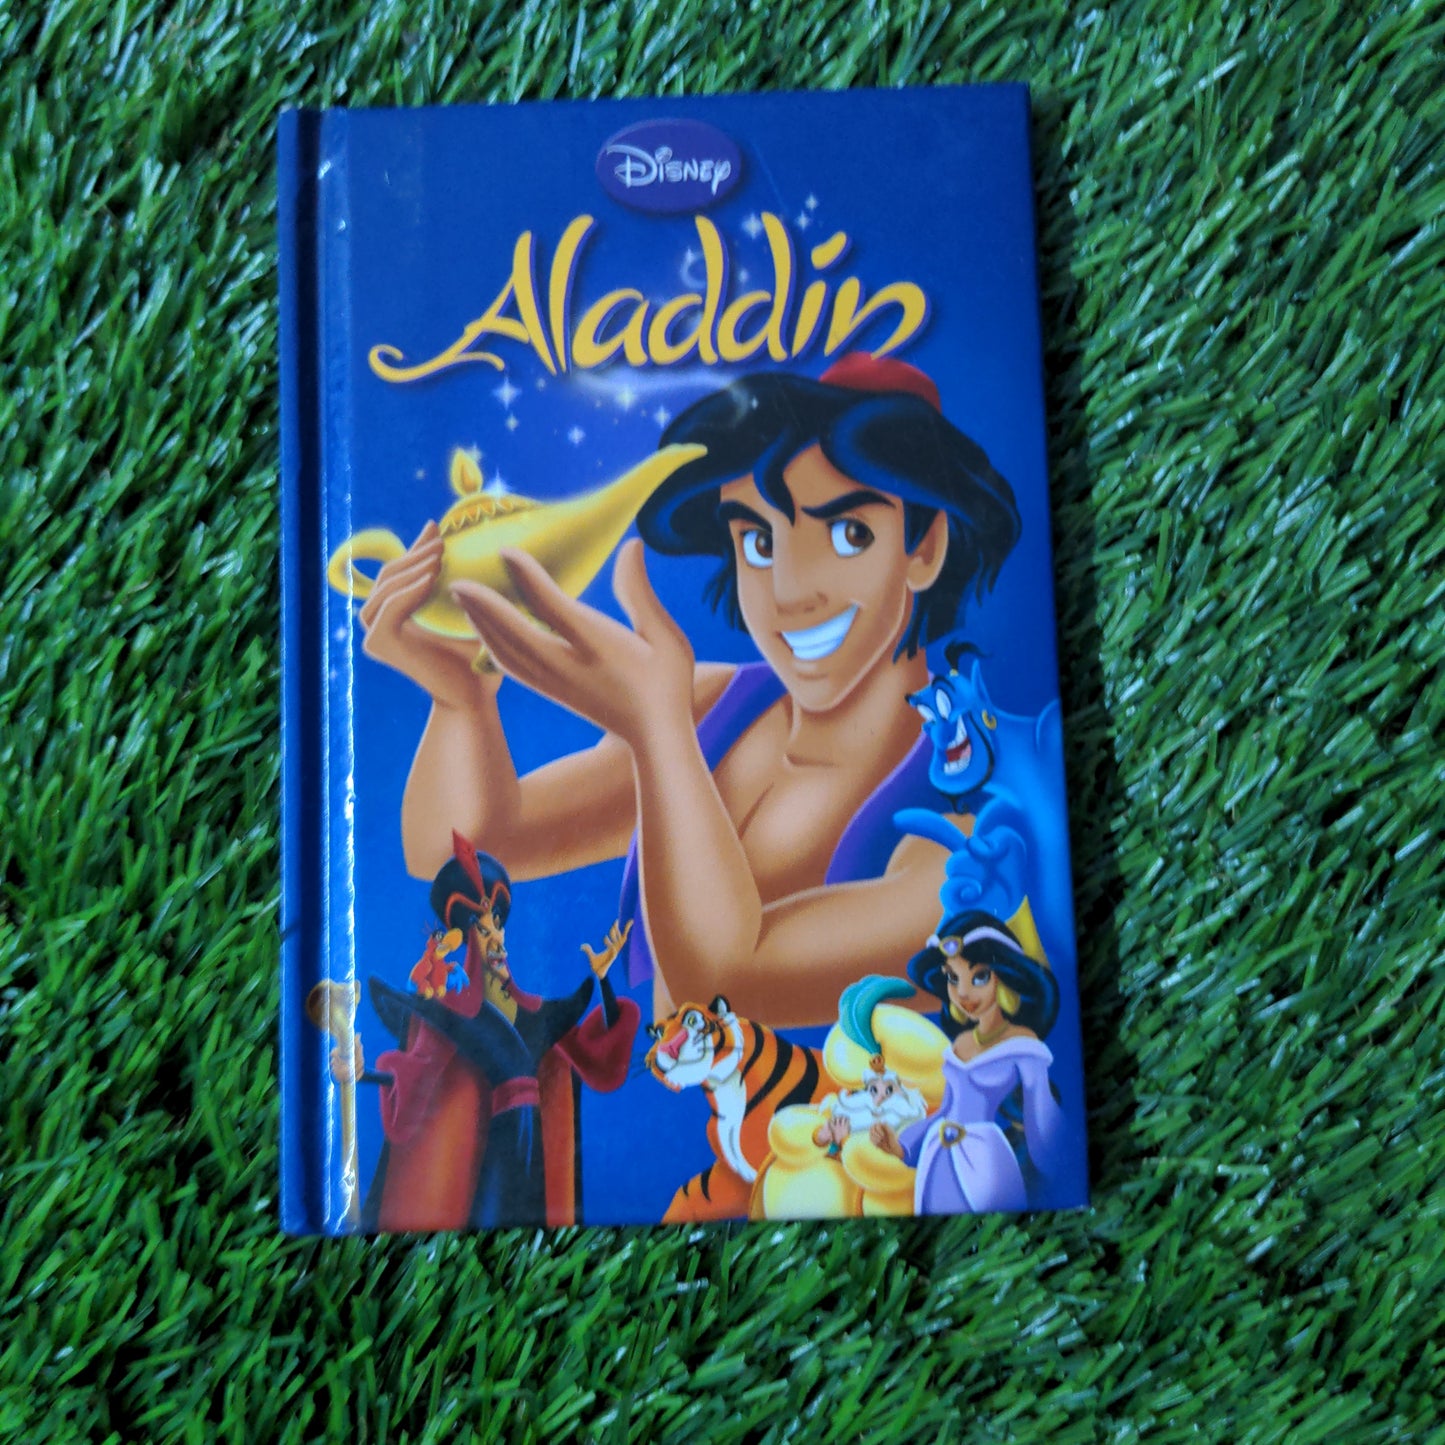 Aladdin - Very good condition